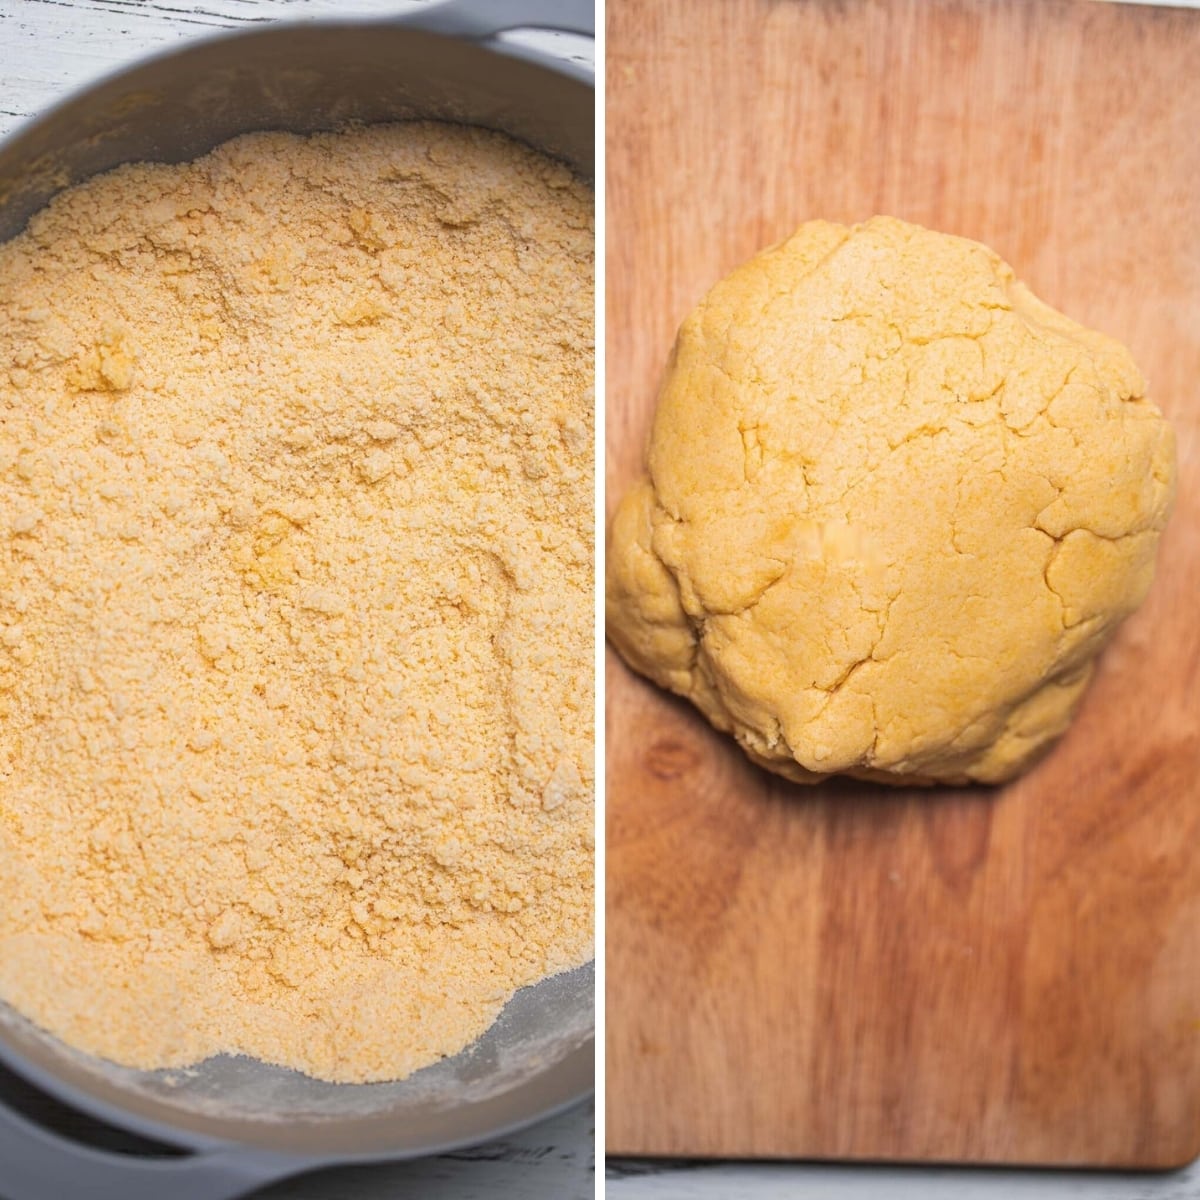 making the pie crust dough